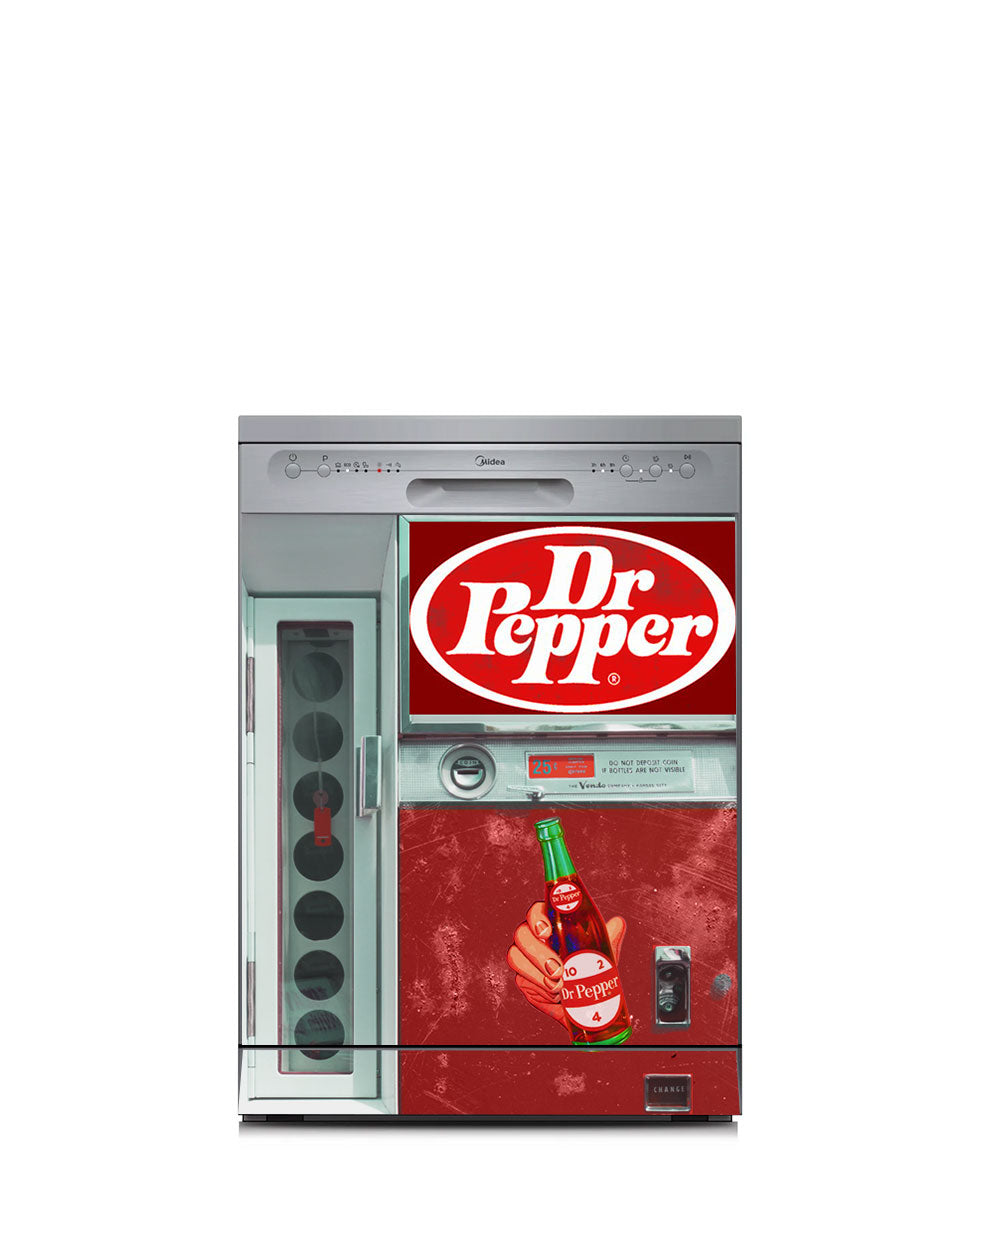 Dr Pepper 70's